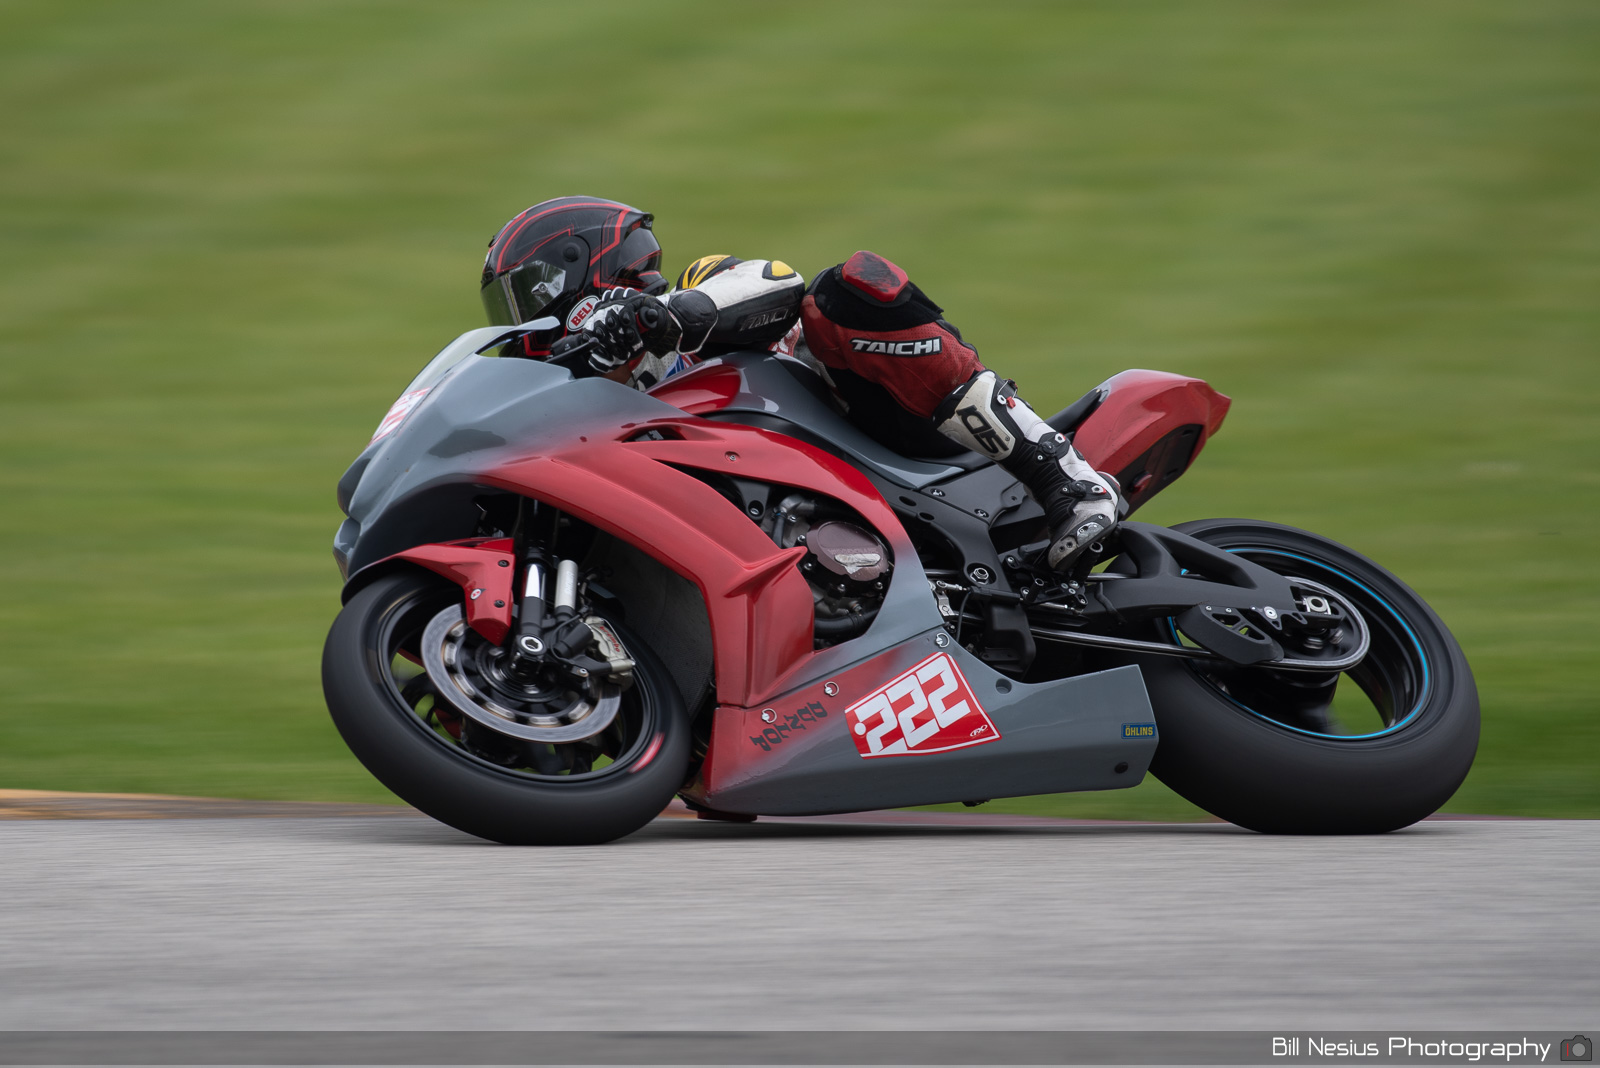 Manuel Segura on the Number 222 Red Lobo Racing Kawasaki / DSC_1334 / 4